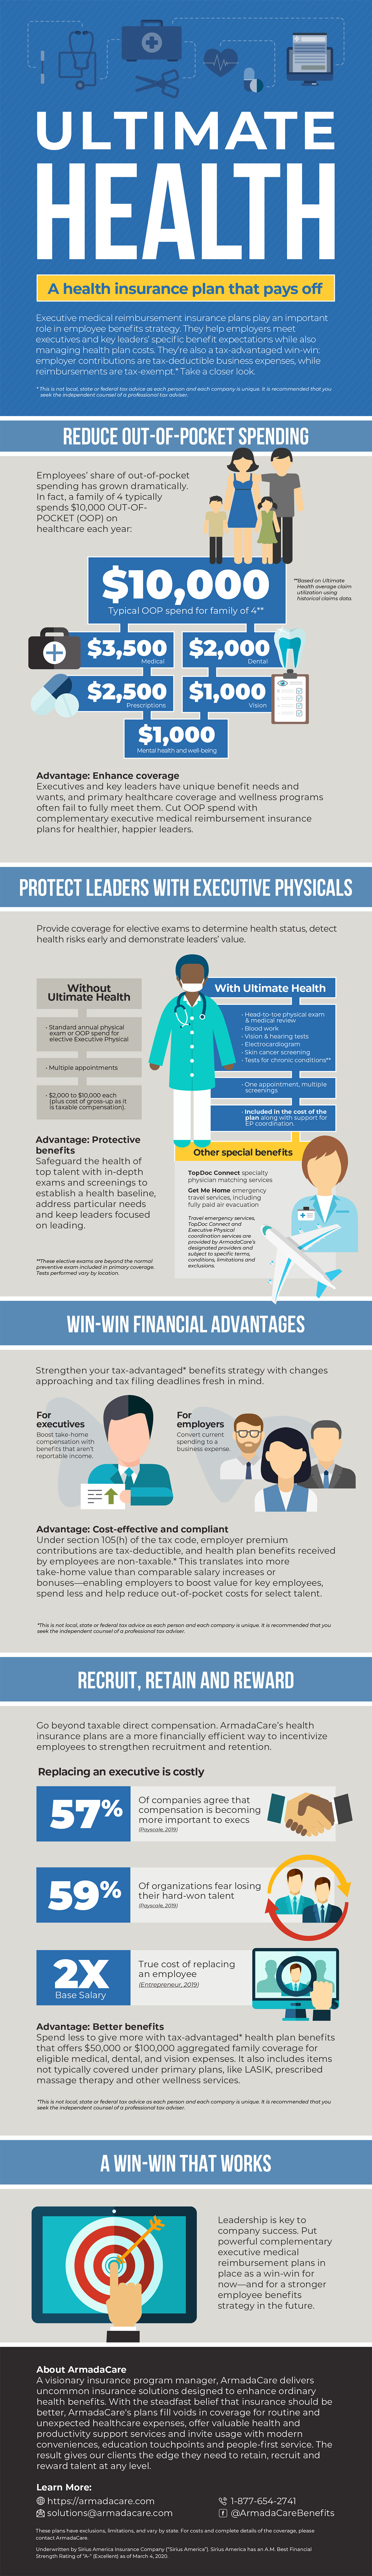 Executive medical reimbursement insurance plans infographic